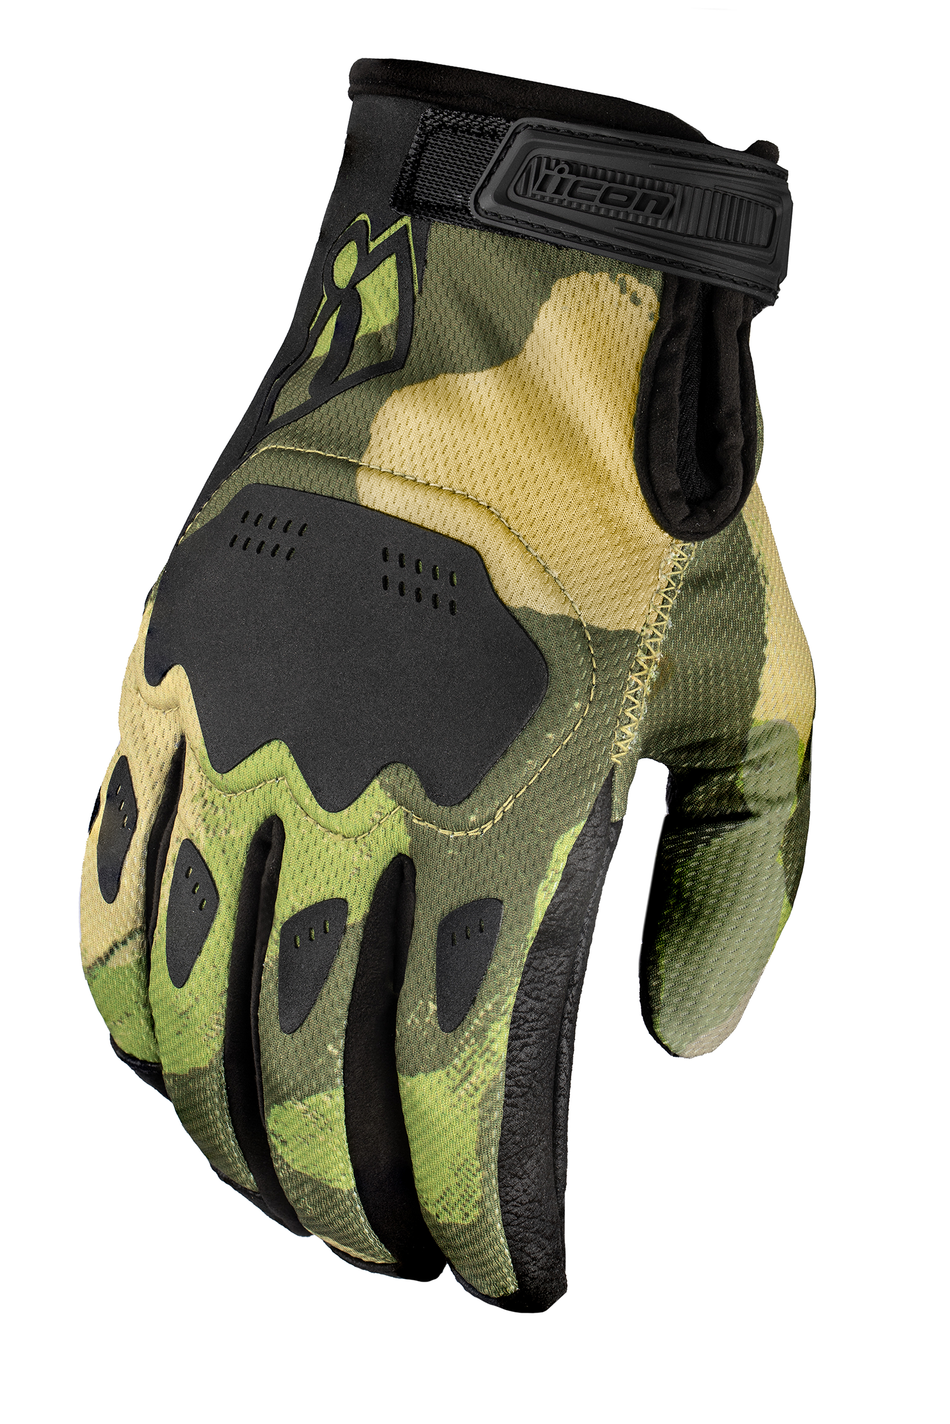 ICON Hooligan Magnacross™ Gloves - Camo Tan - Large 3301-4829